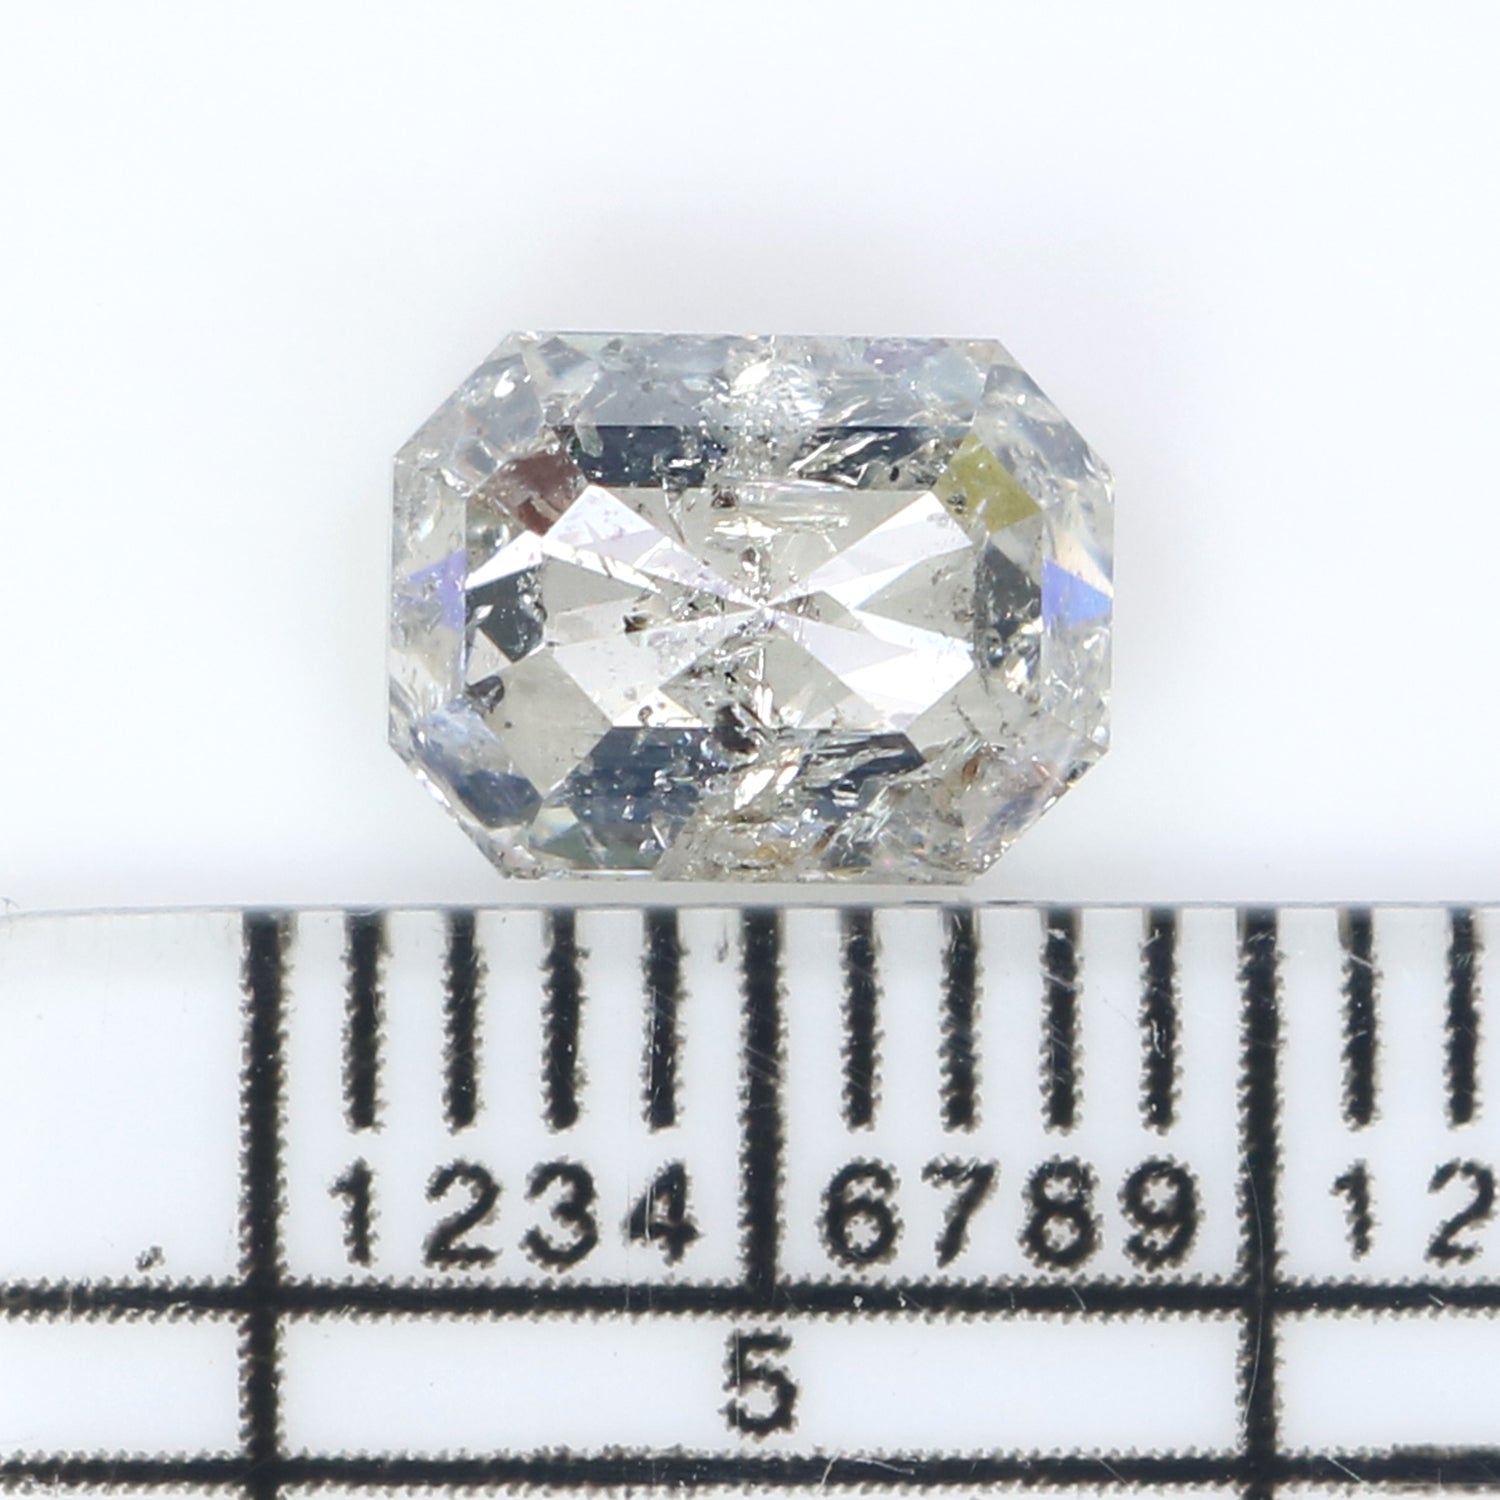 1.57 CT Natural Loose Emerald Shape Diamond White - G Color Emerald Cut Diamond 7.30 MM Natural Loose Emerald Shape Rose Cut Diamond QL2584